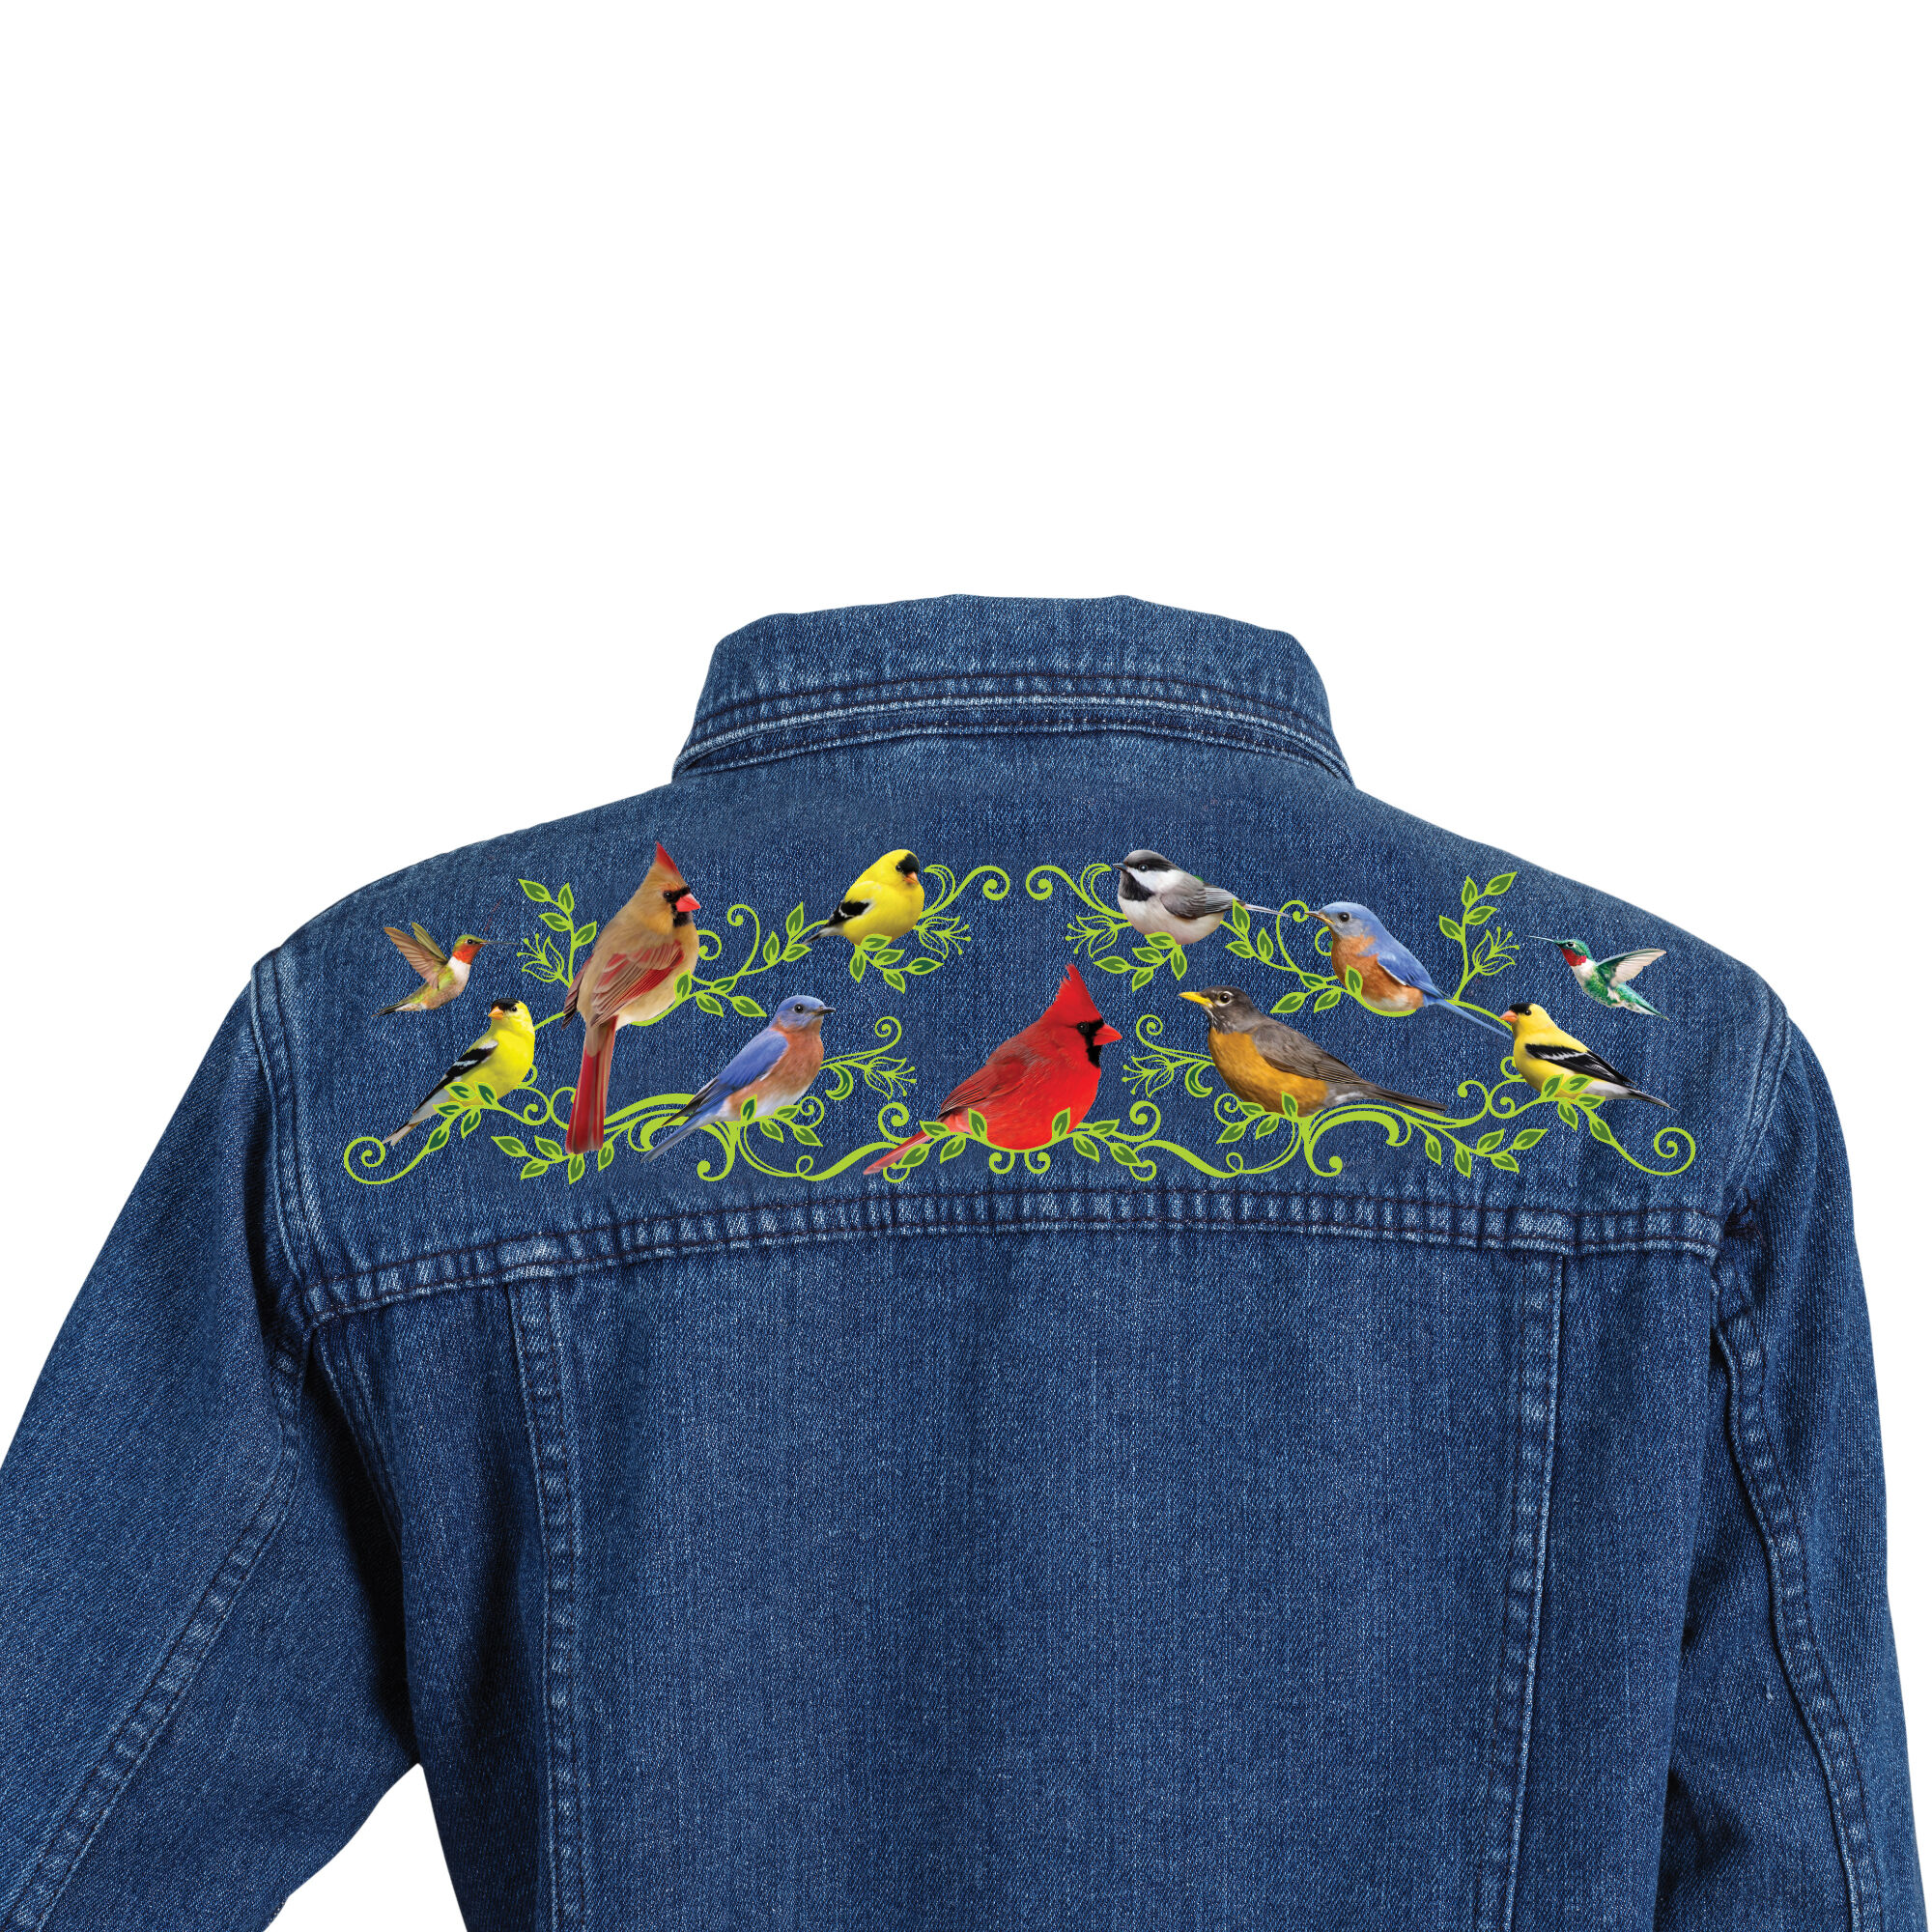 Personalized Songbird Denim Jacket 10632 0013 b back